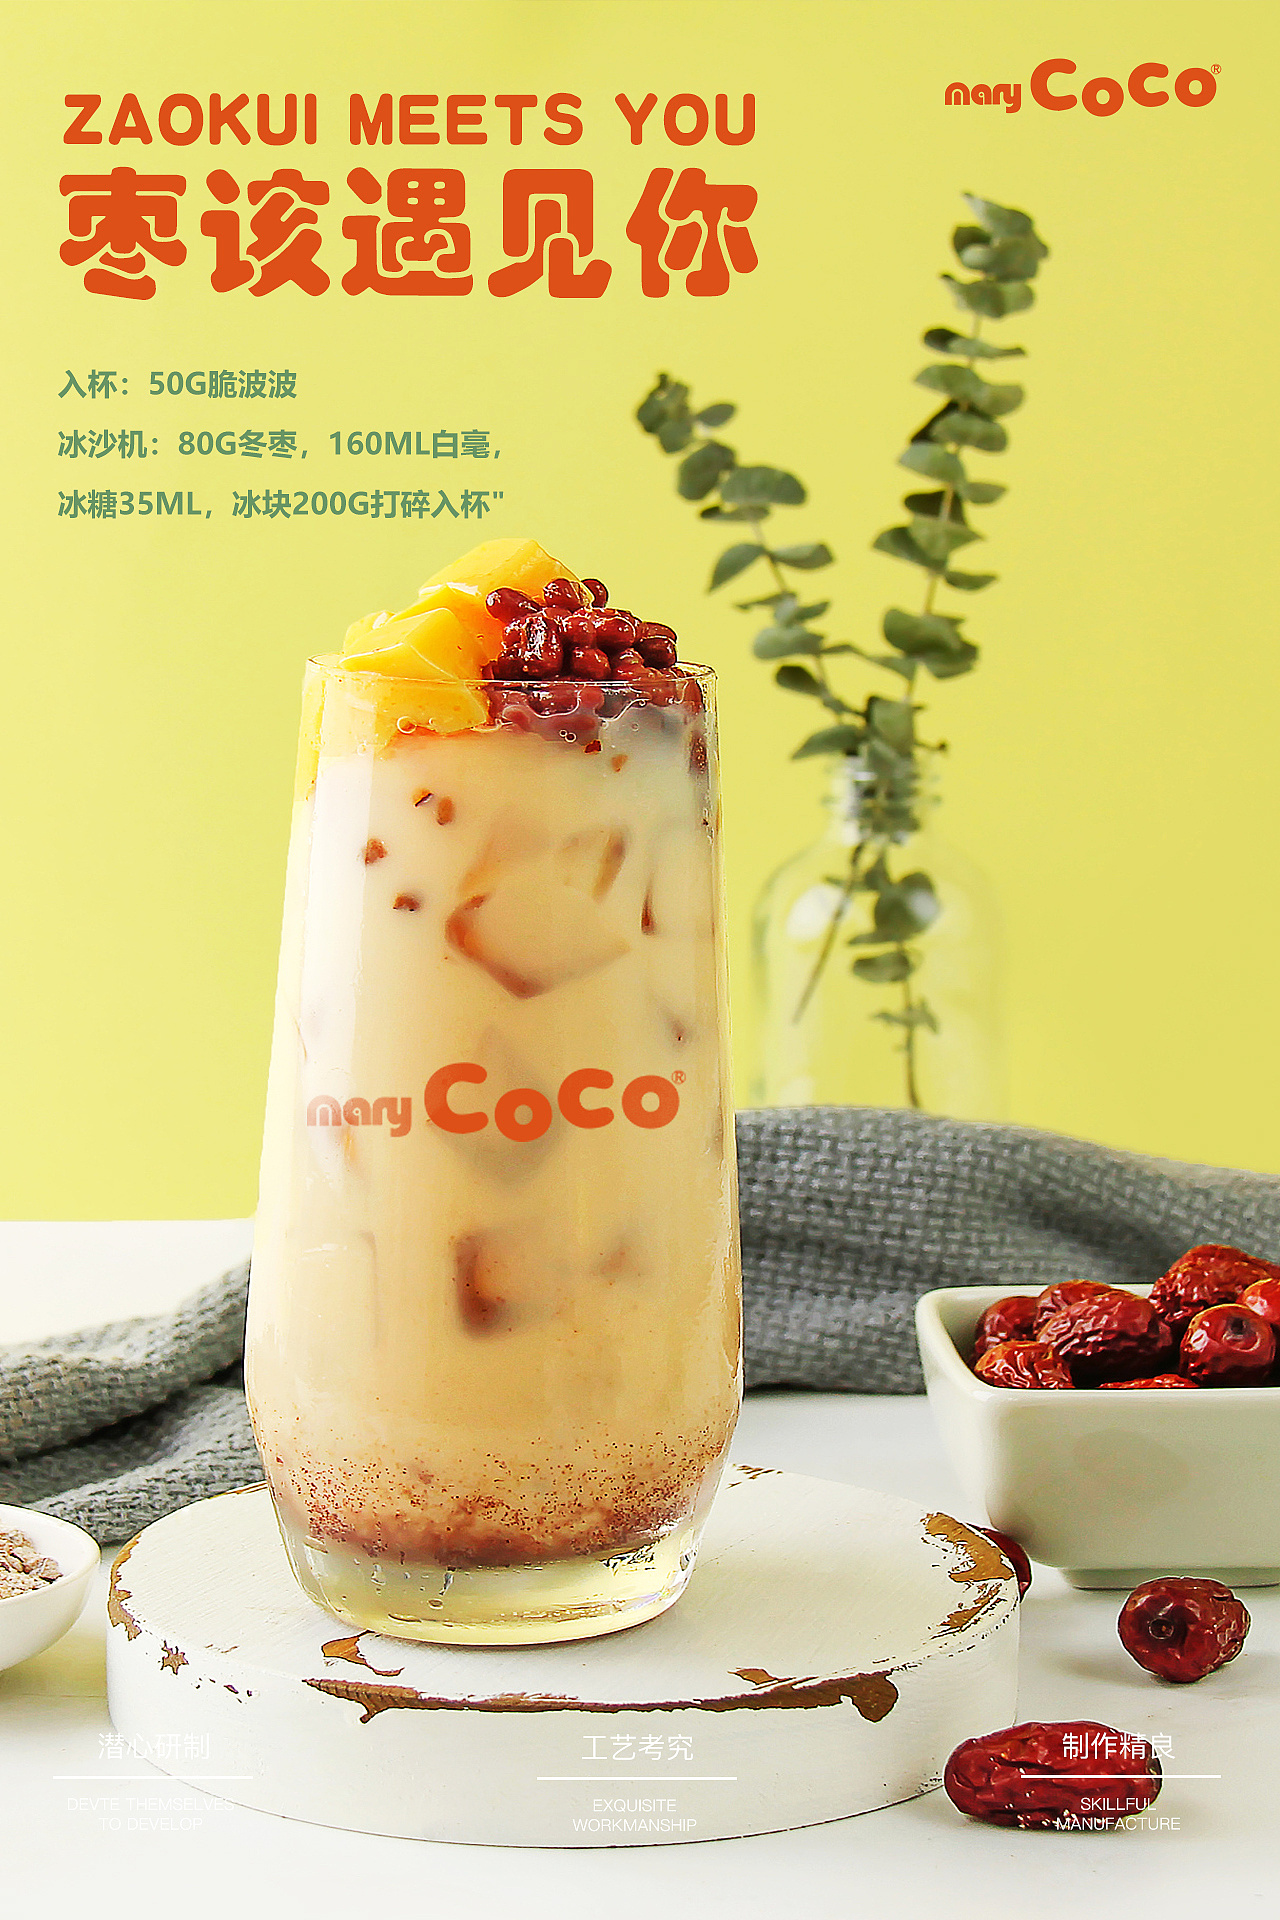 coco奶茶产品